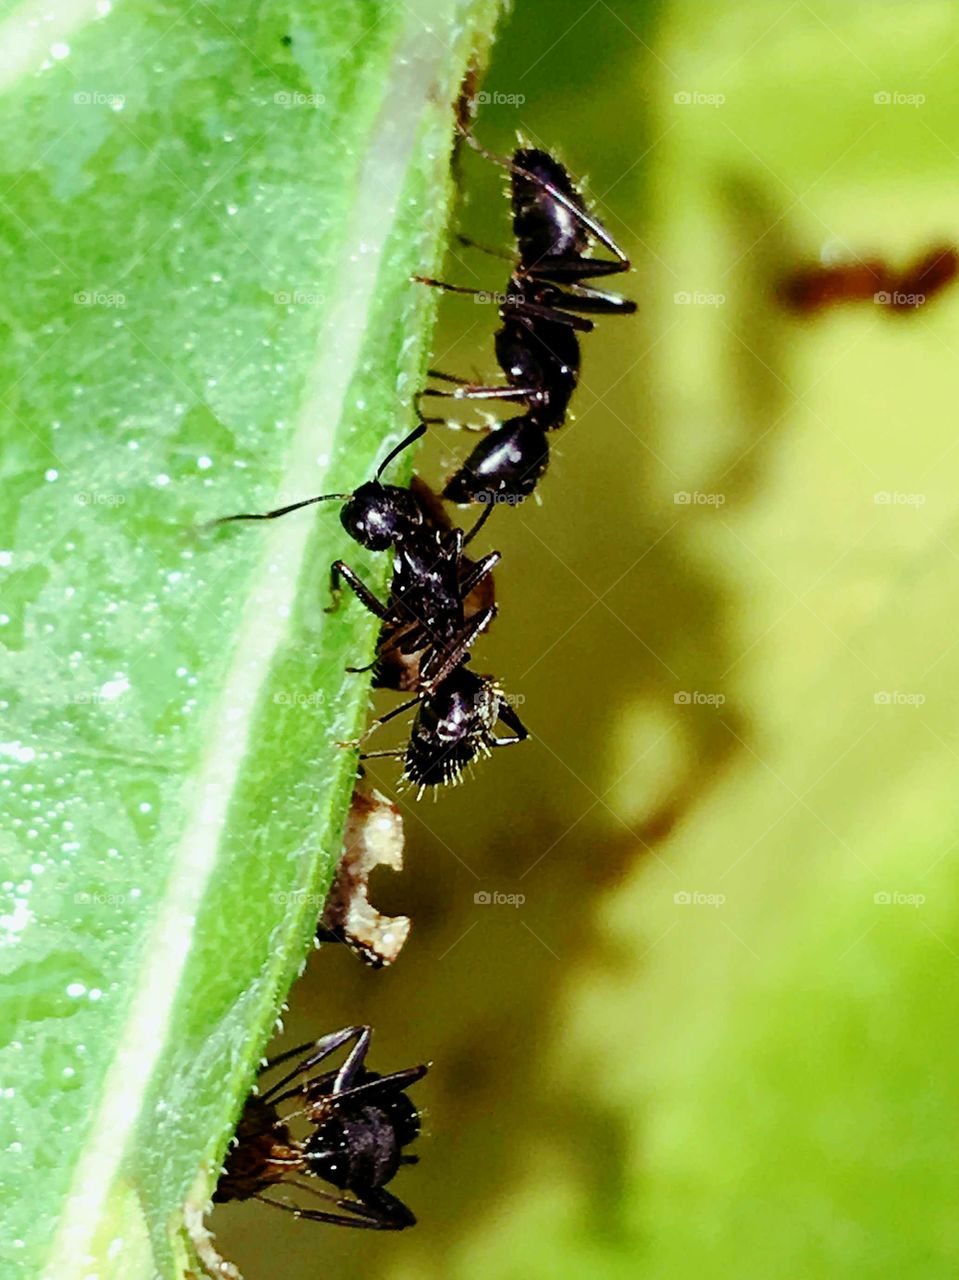 Closeup of ants on flower leaf.